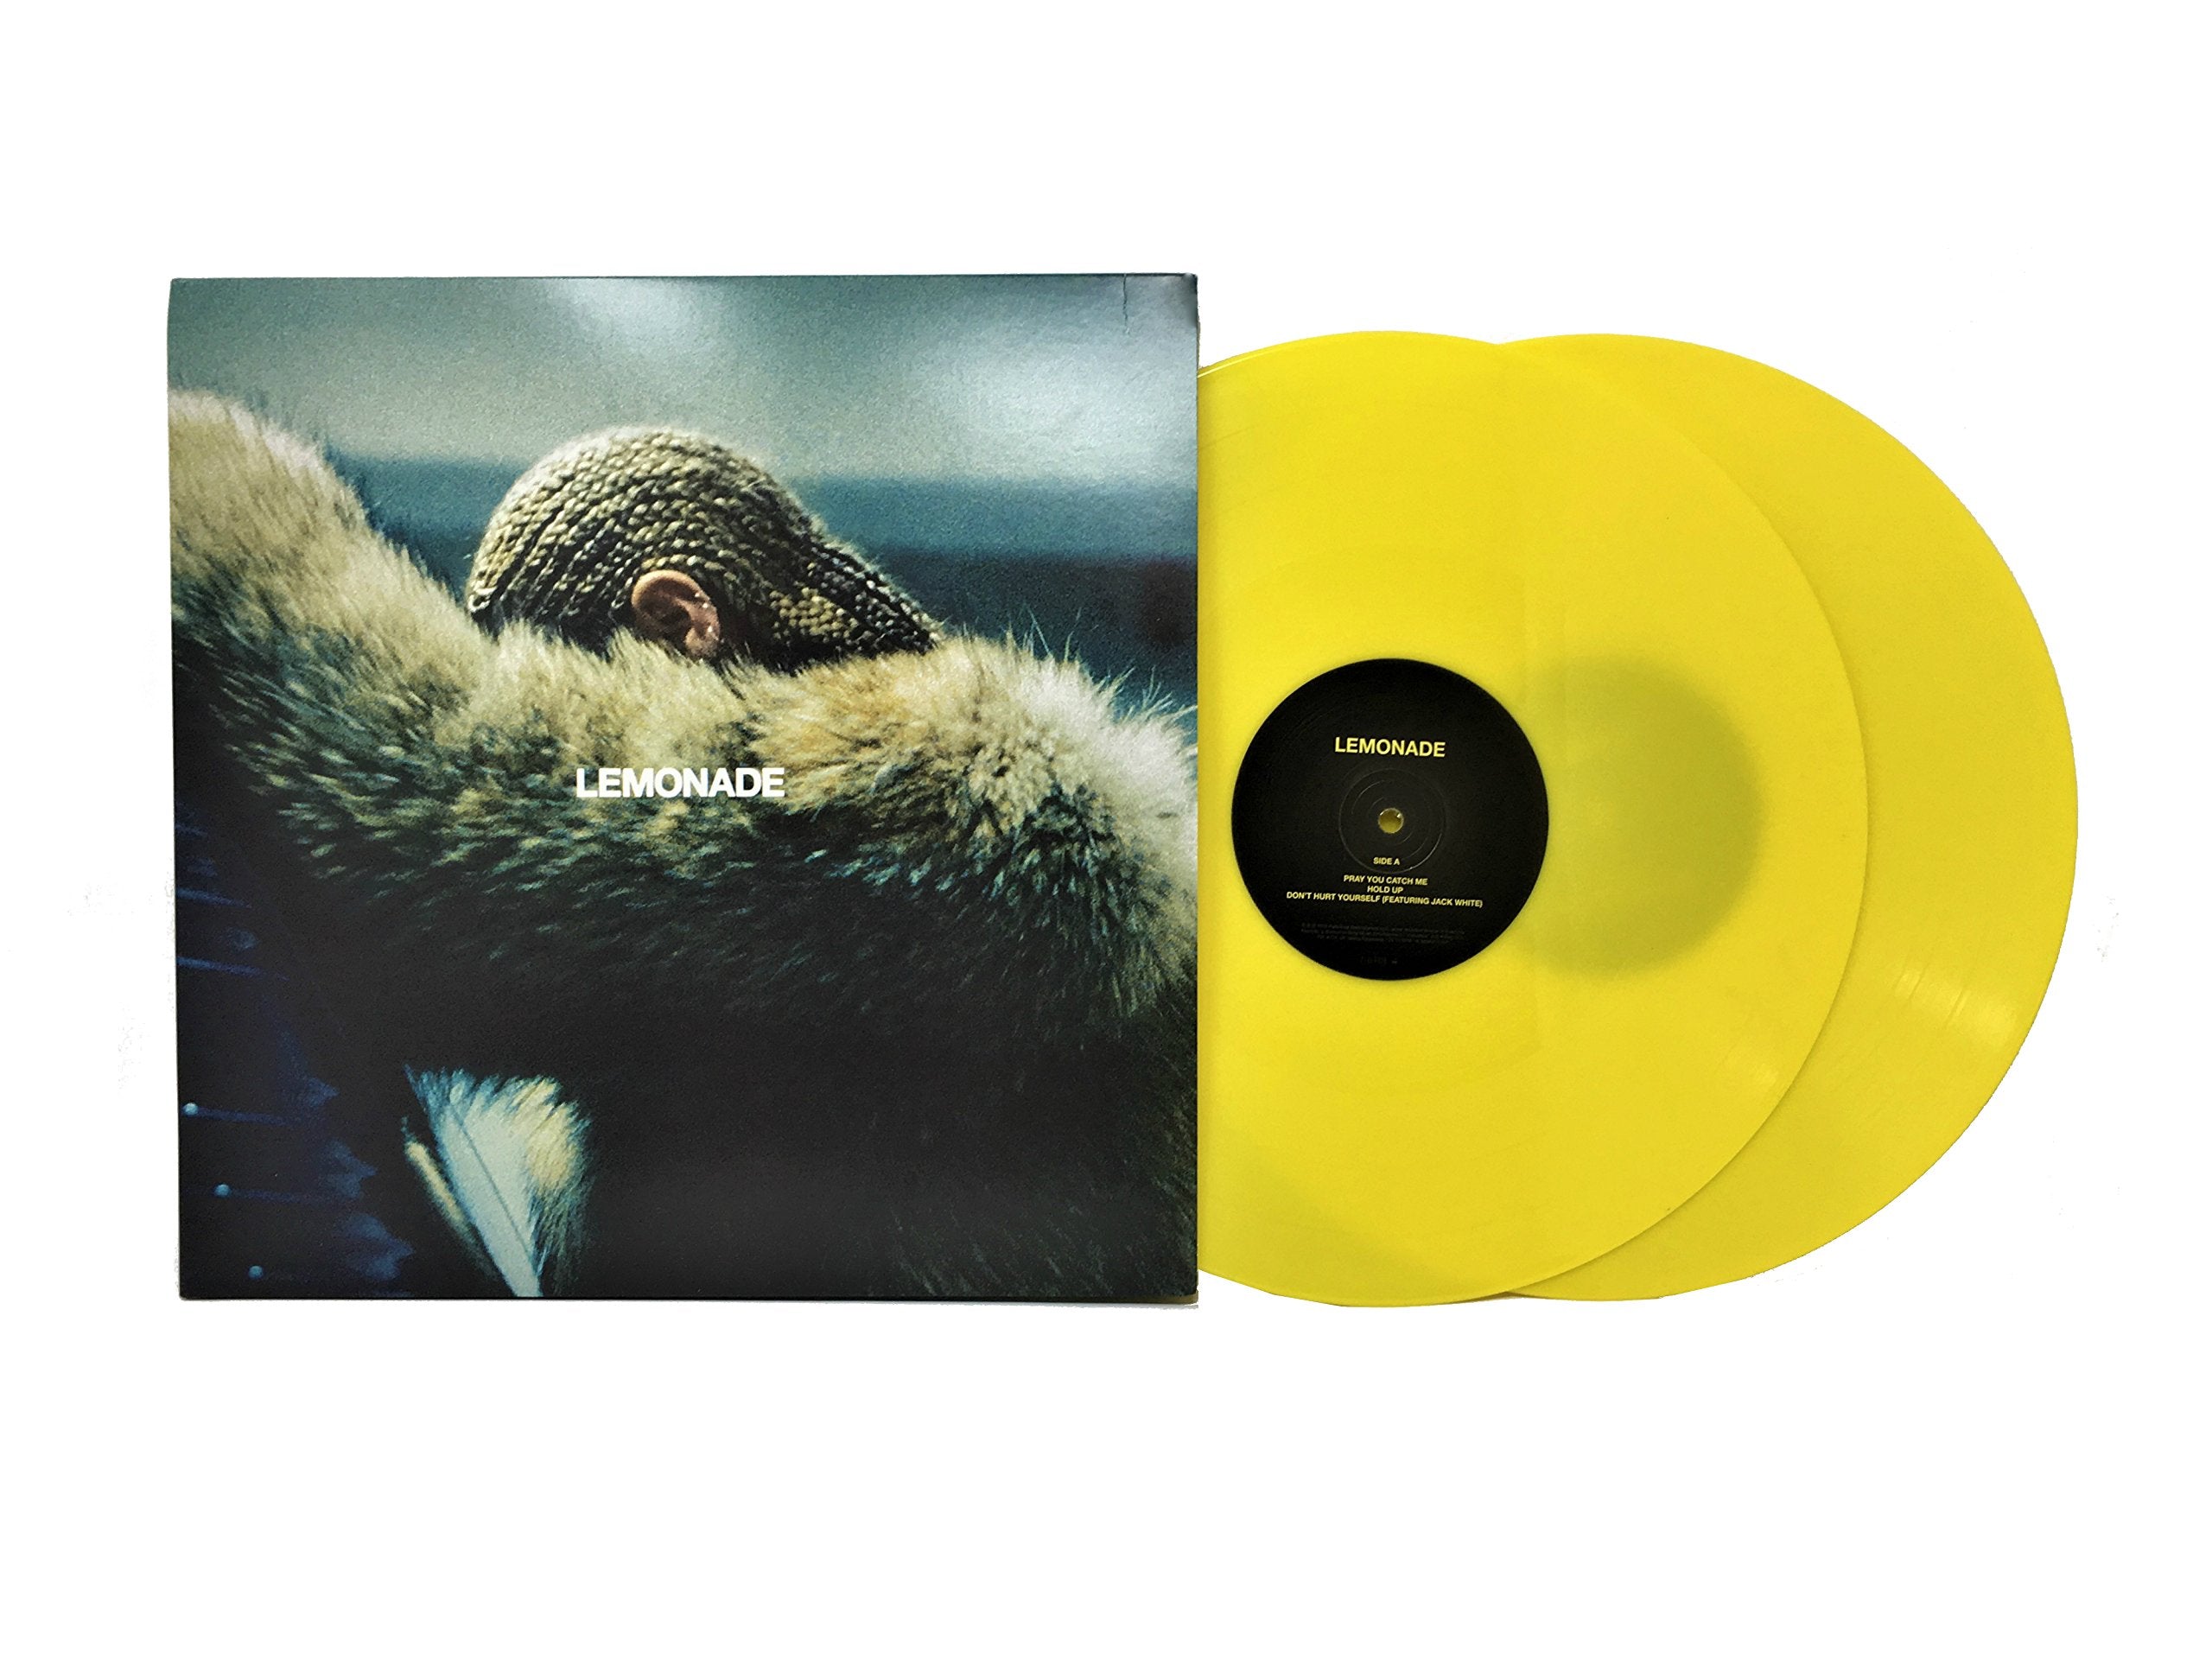 Beyonce's 'Lemonade' on Yellow Vinyl LP Record